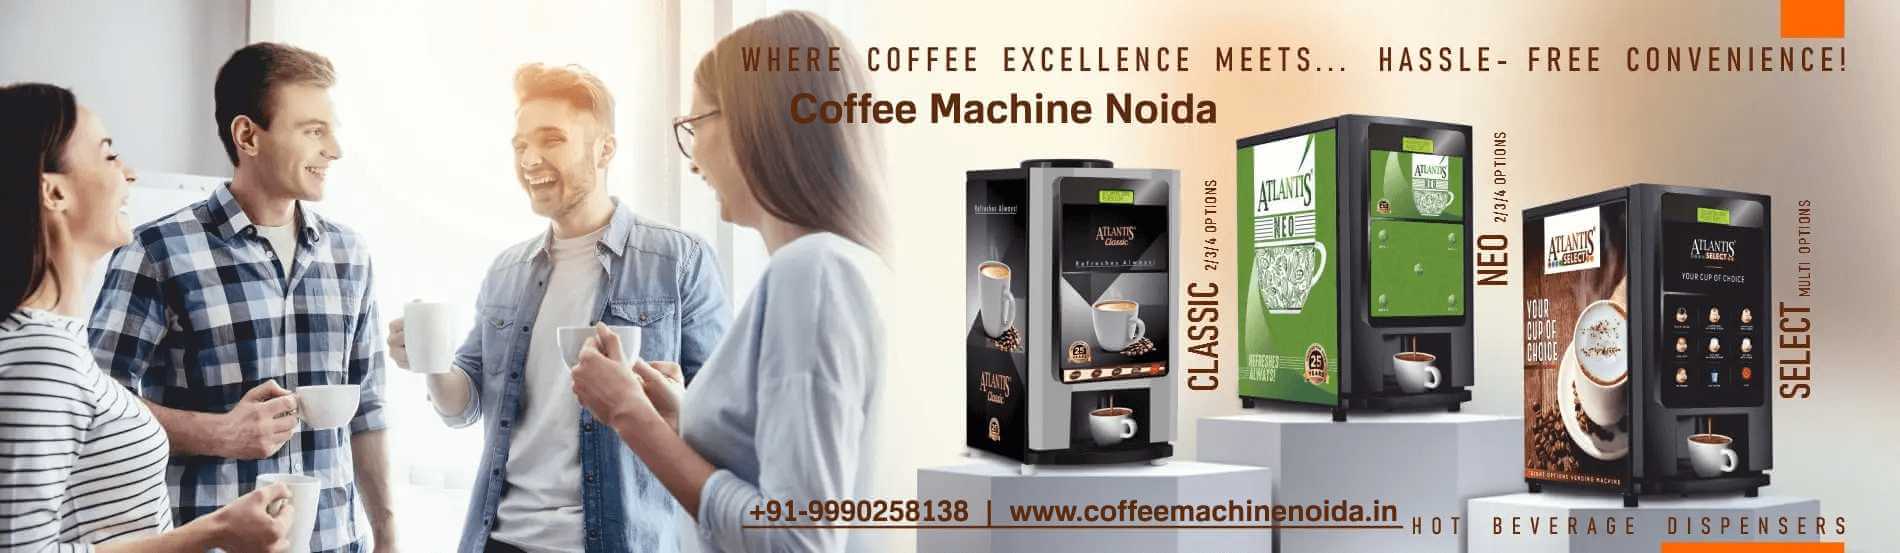 Atlantis Tea Coffee Vending Machine Services Noida